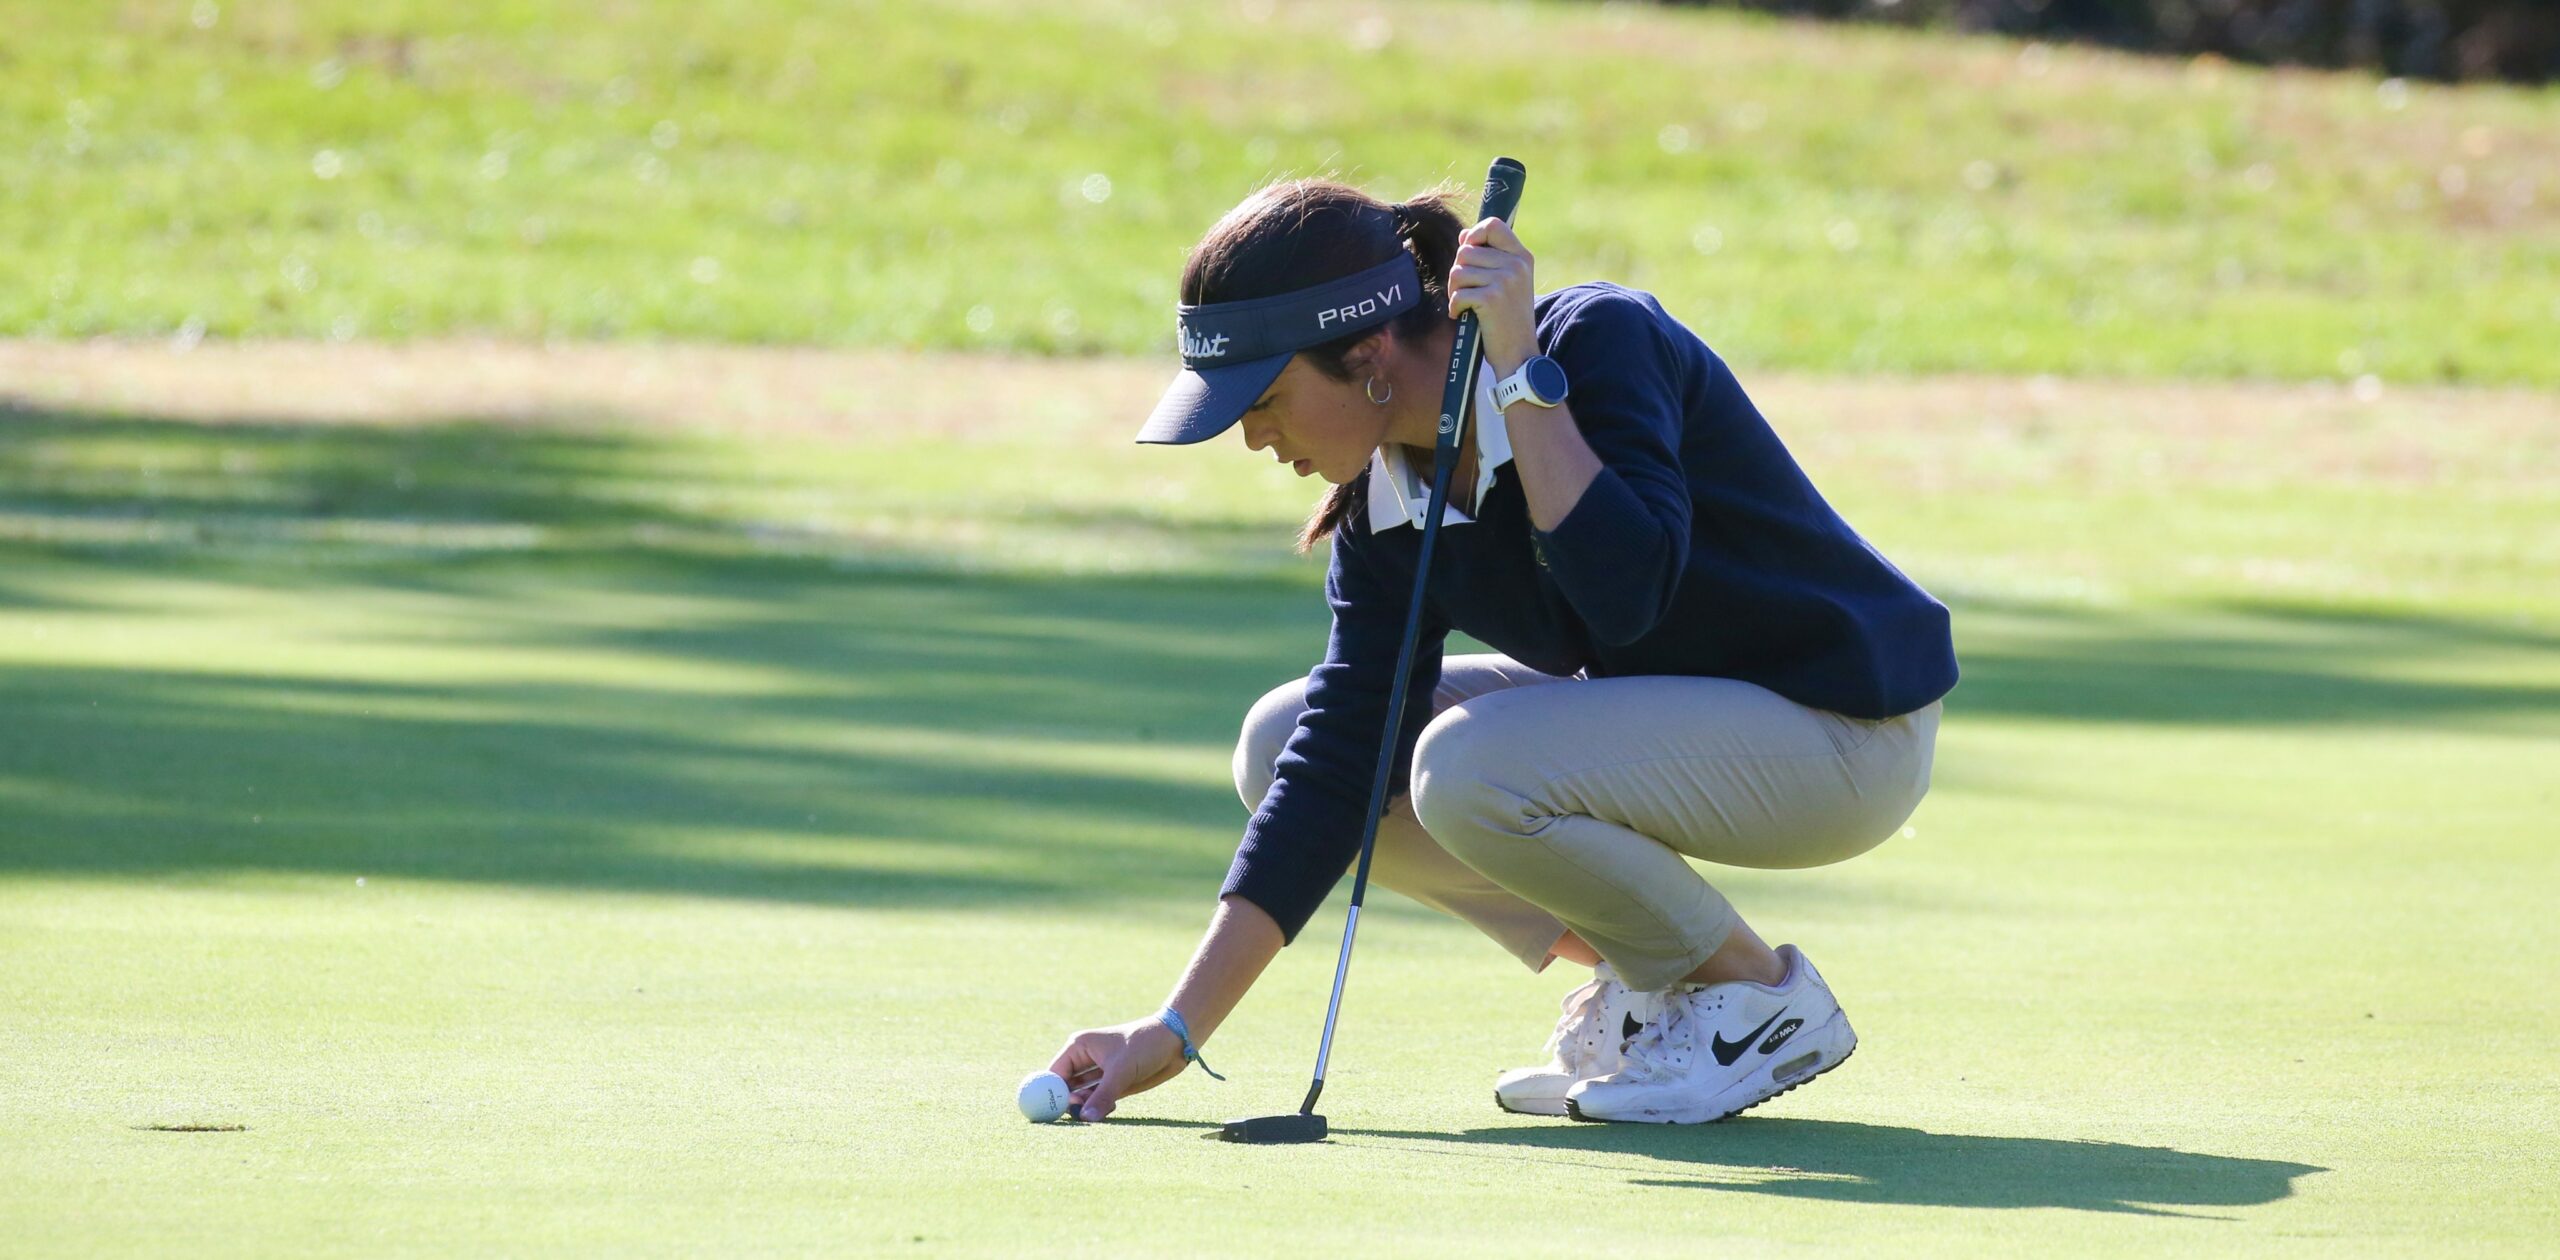 El golf femení està en auge